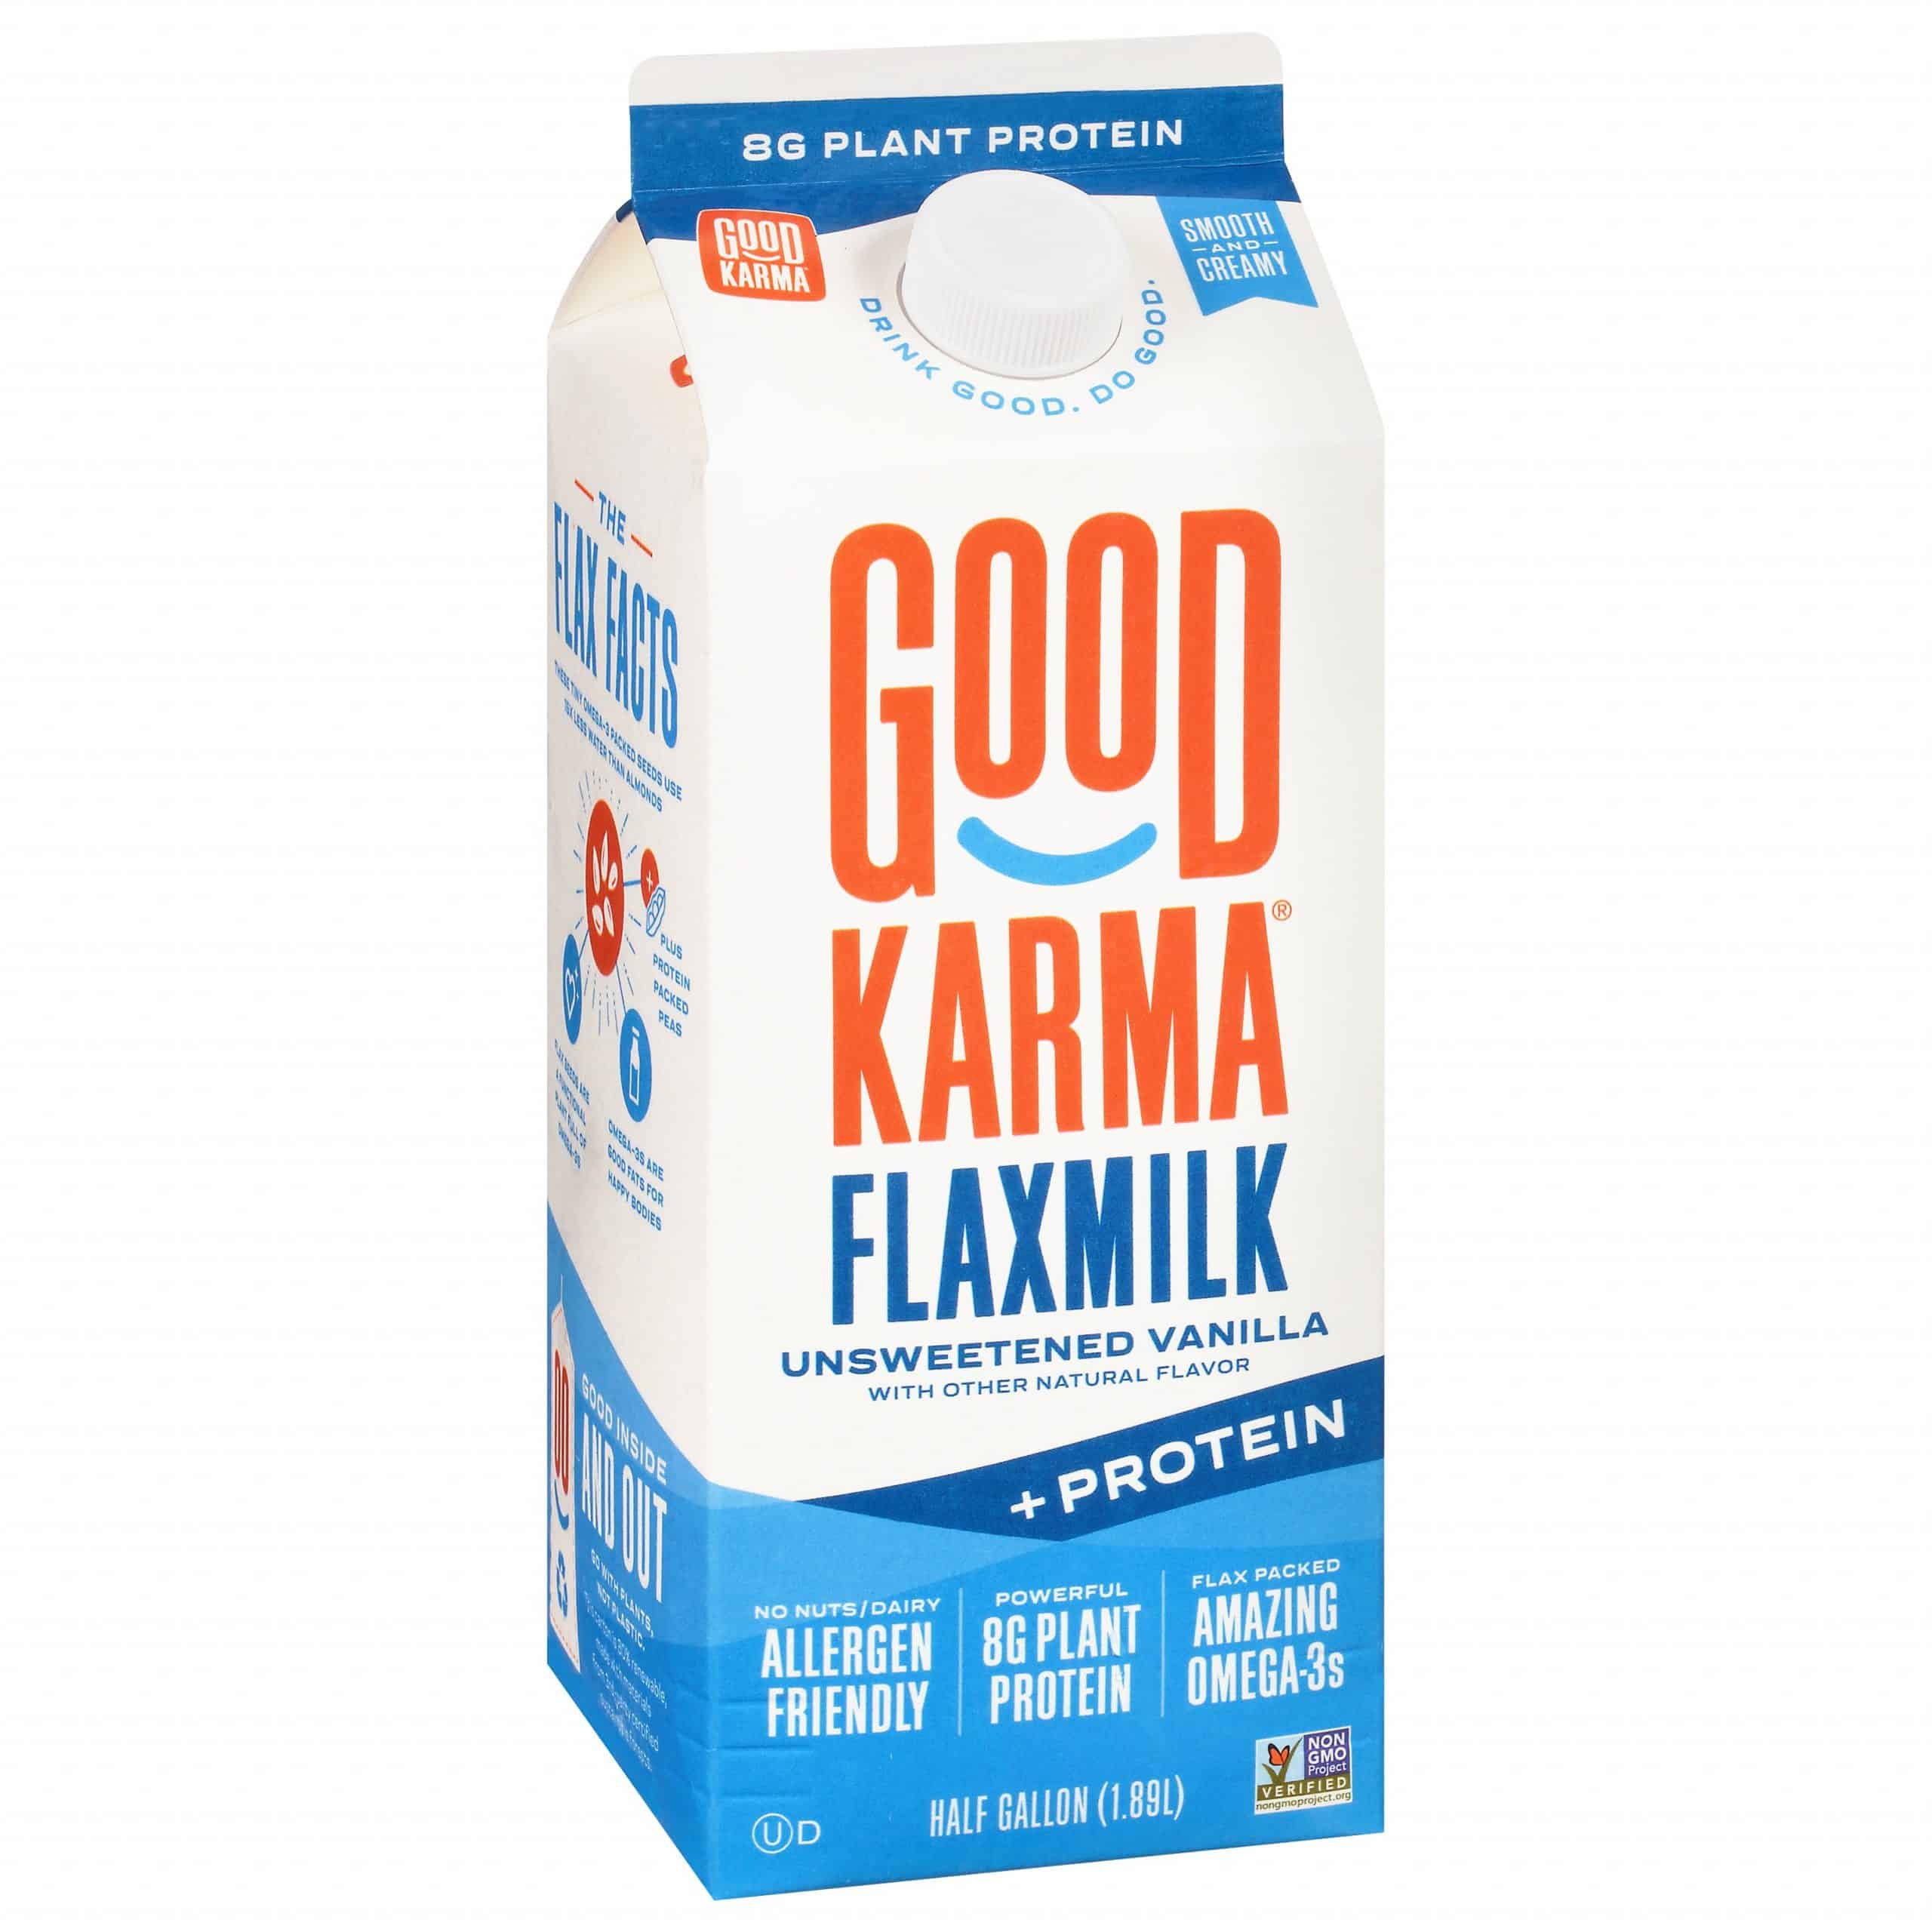 Good Karma Unsweetened Vanilla + Protein Flax Milk